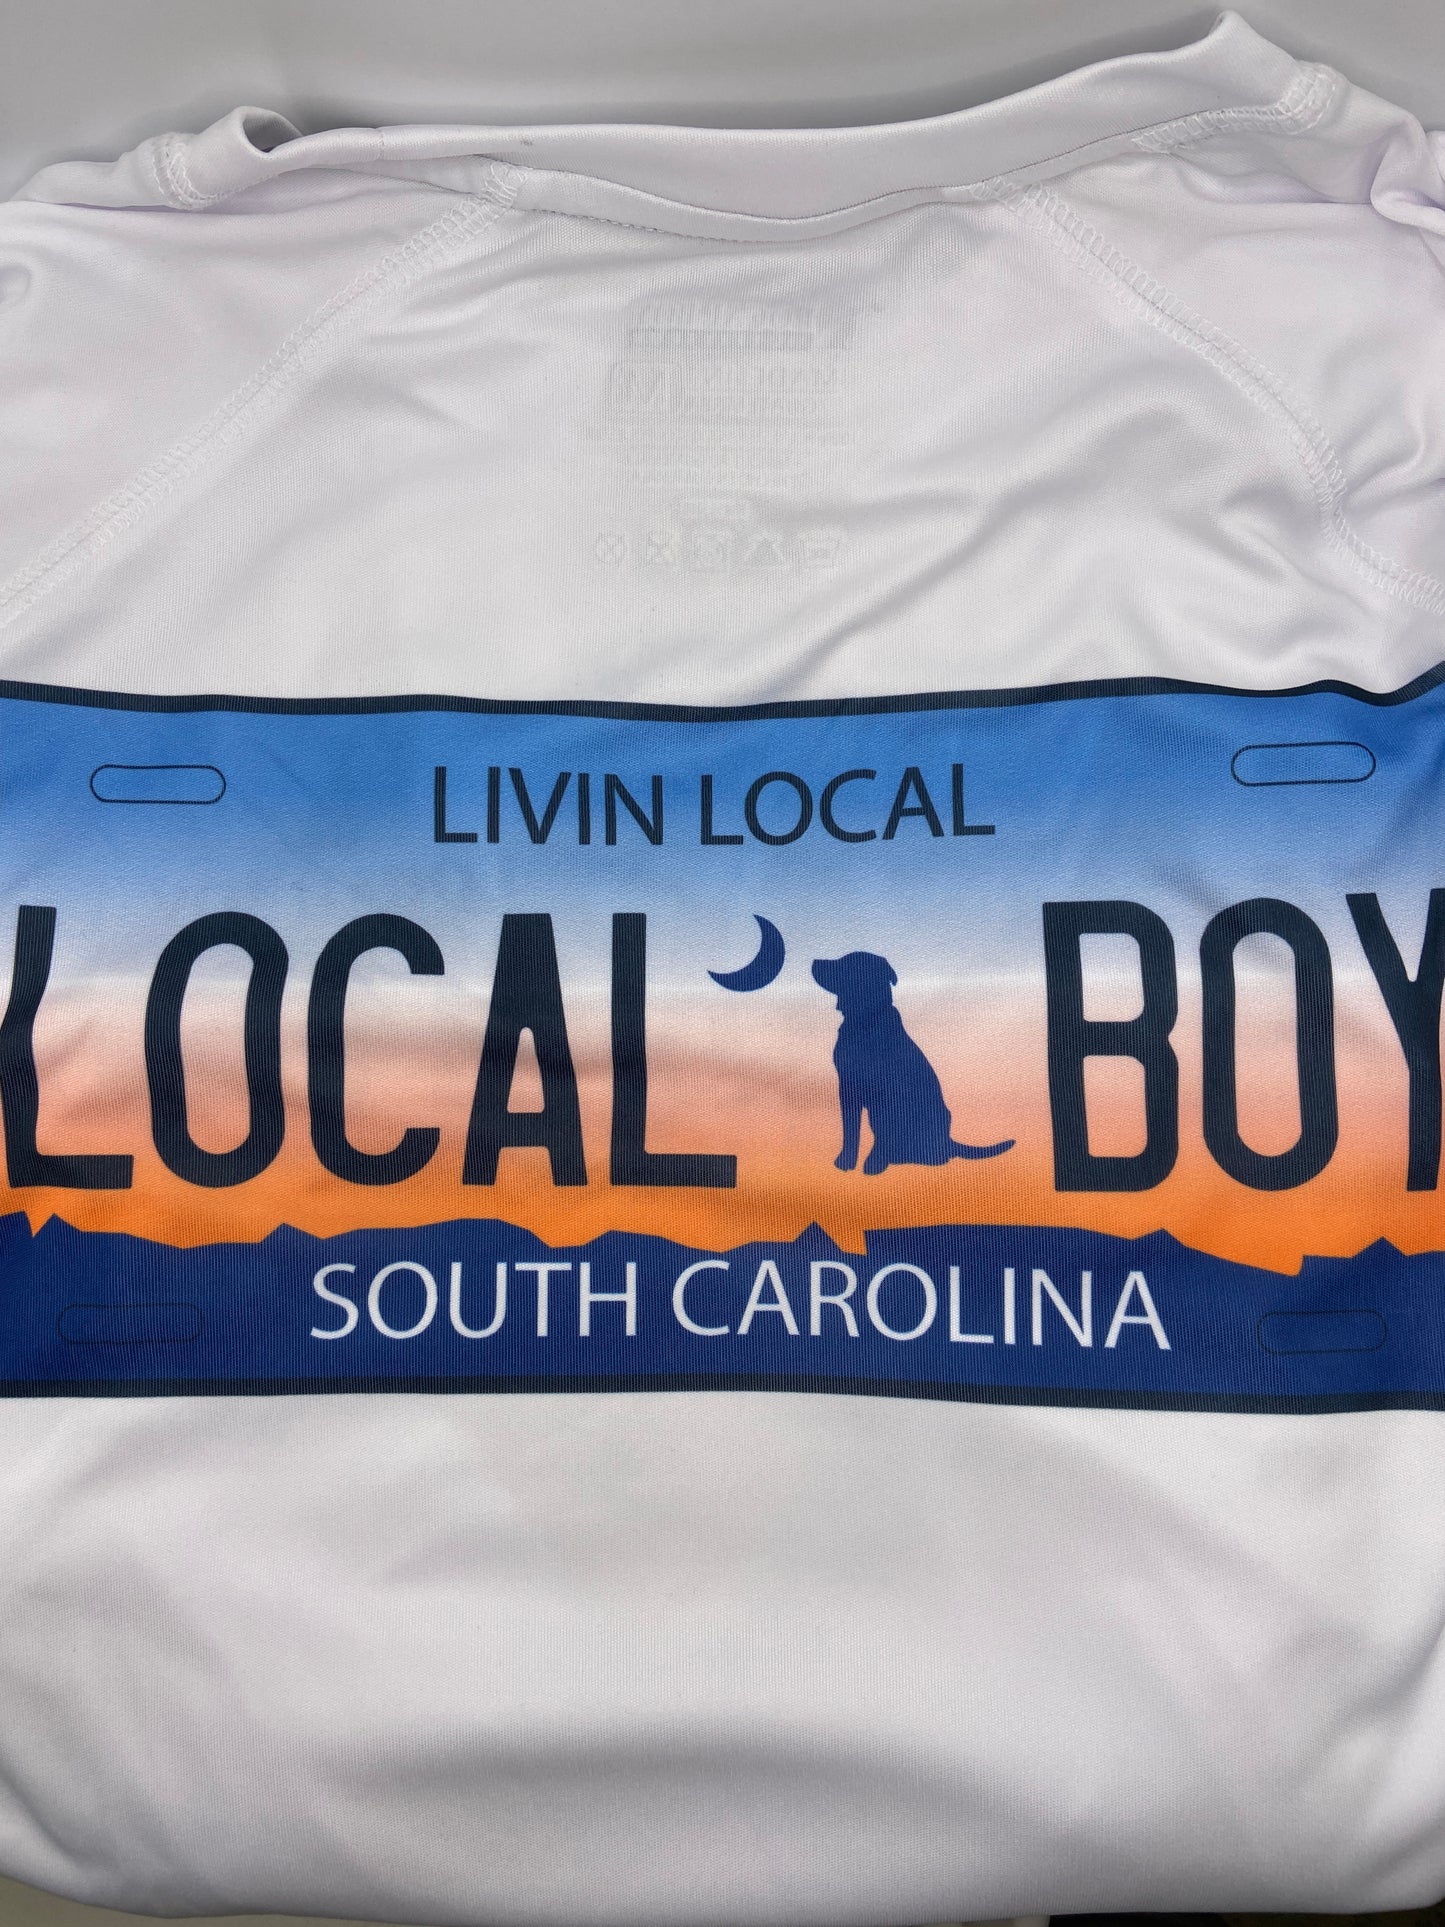 Local Boy South Carolina License Plate Performance Shirt